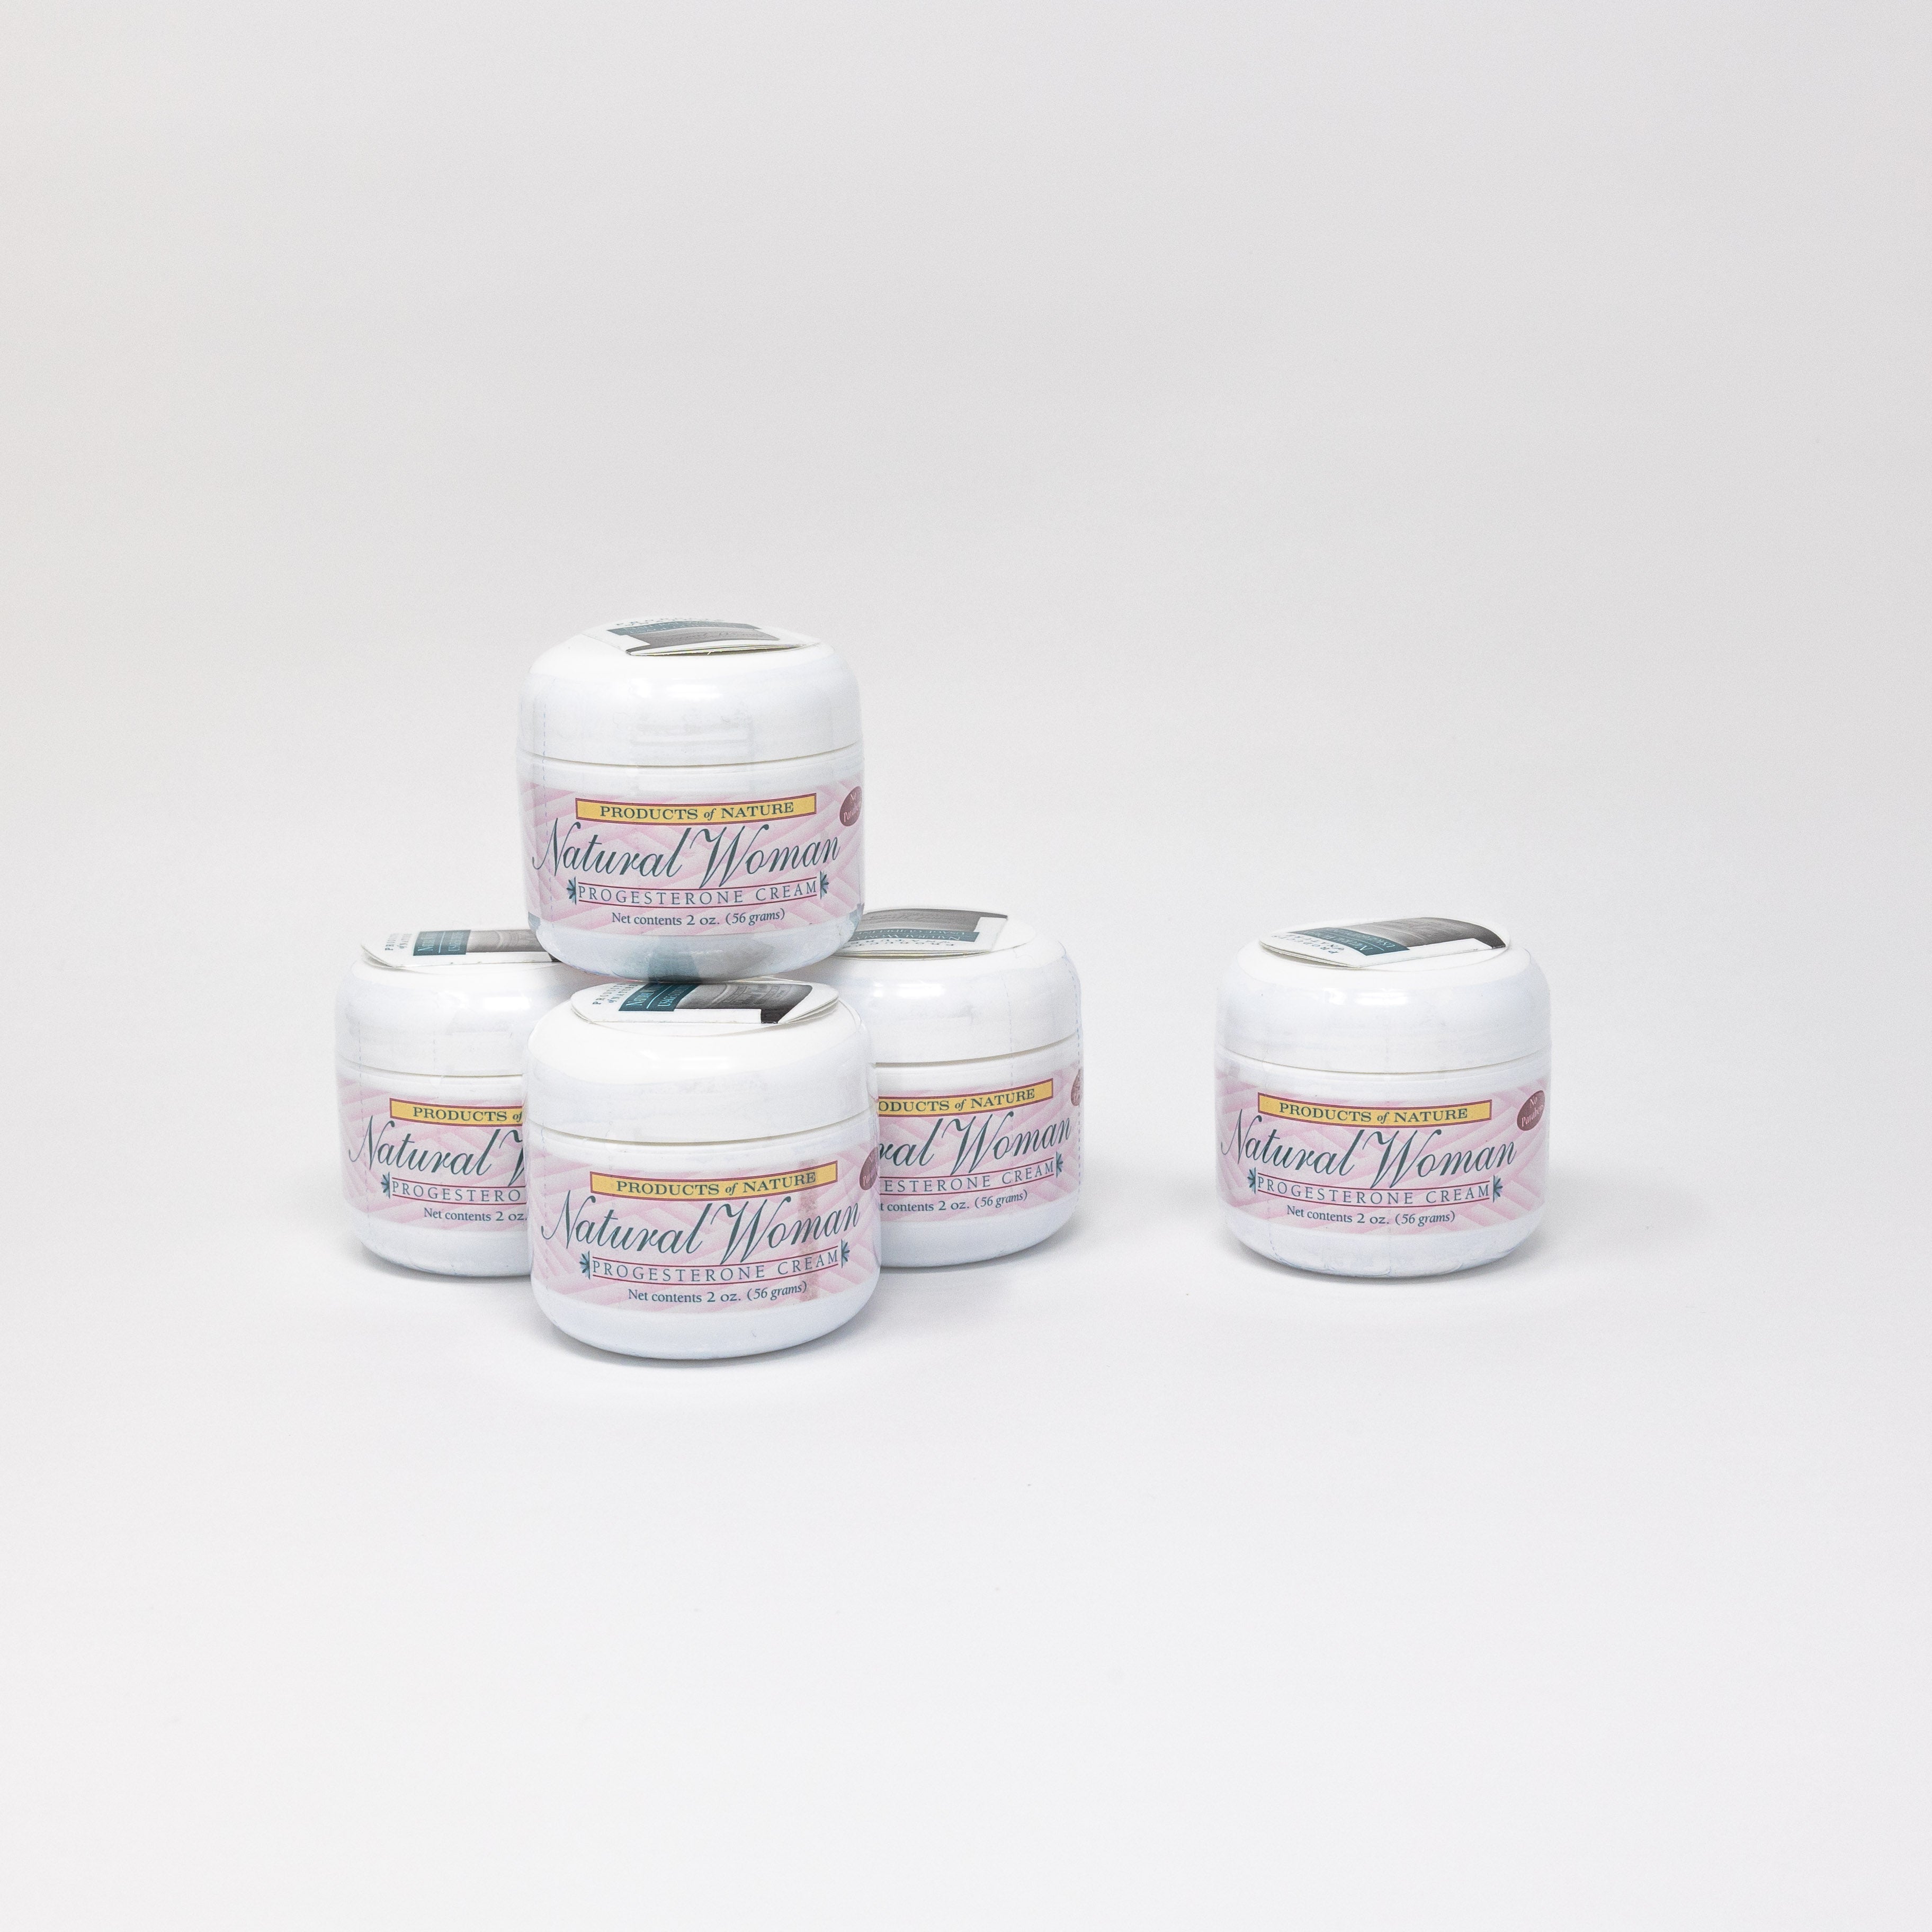 Natural Woman Progesterone Cream - Buy 4 get 1 free - 2 oz. jars